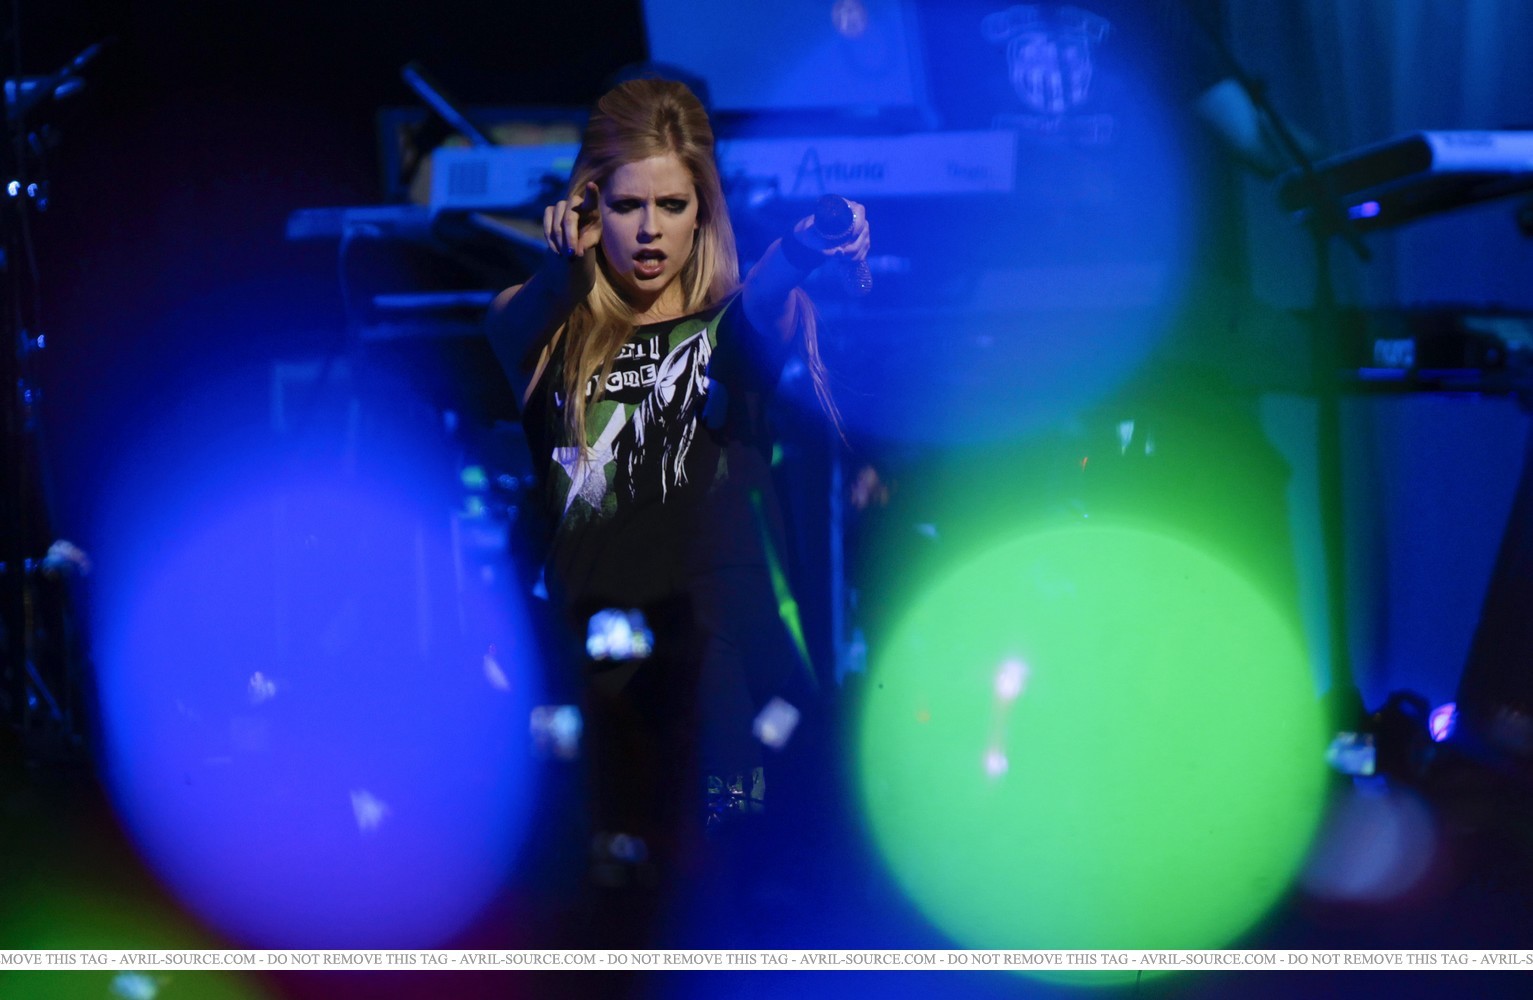 People 1533x1000 Avril Lavigne singer concerts celebrity women open mouth